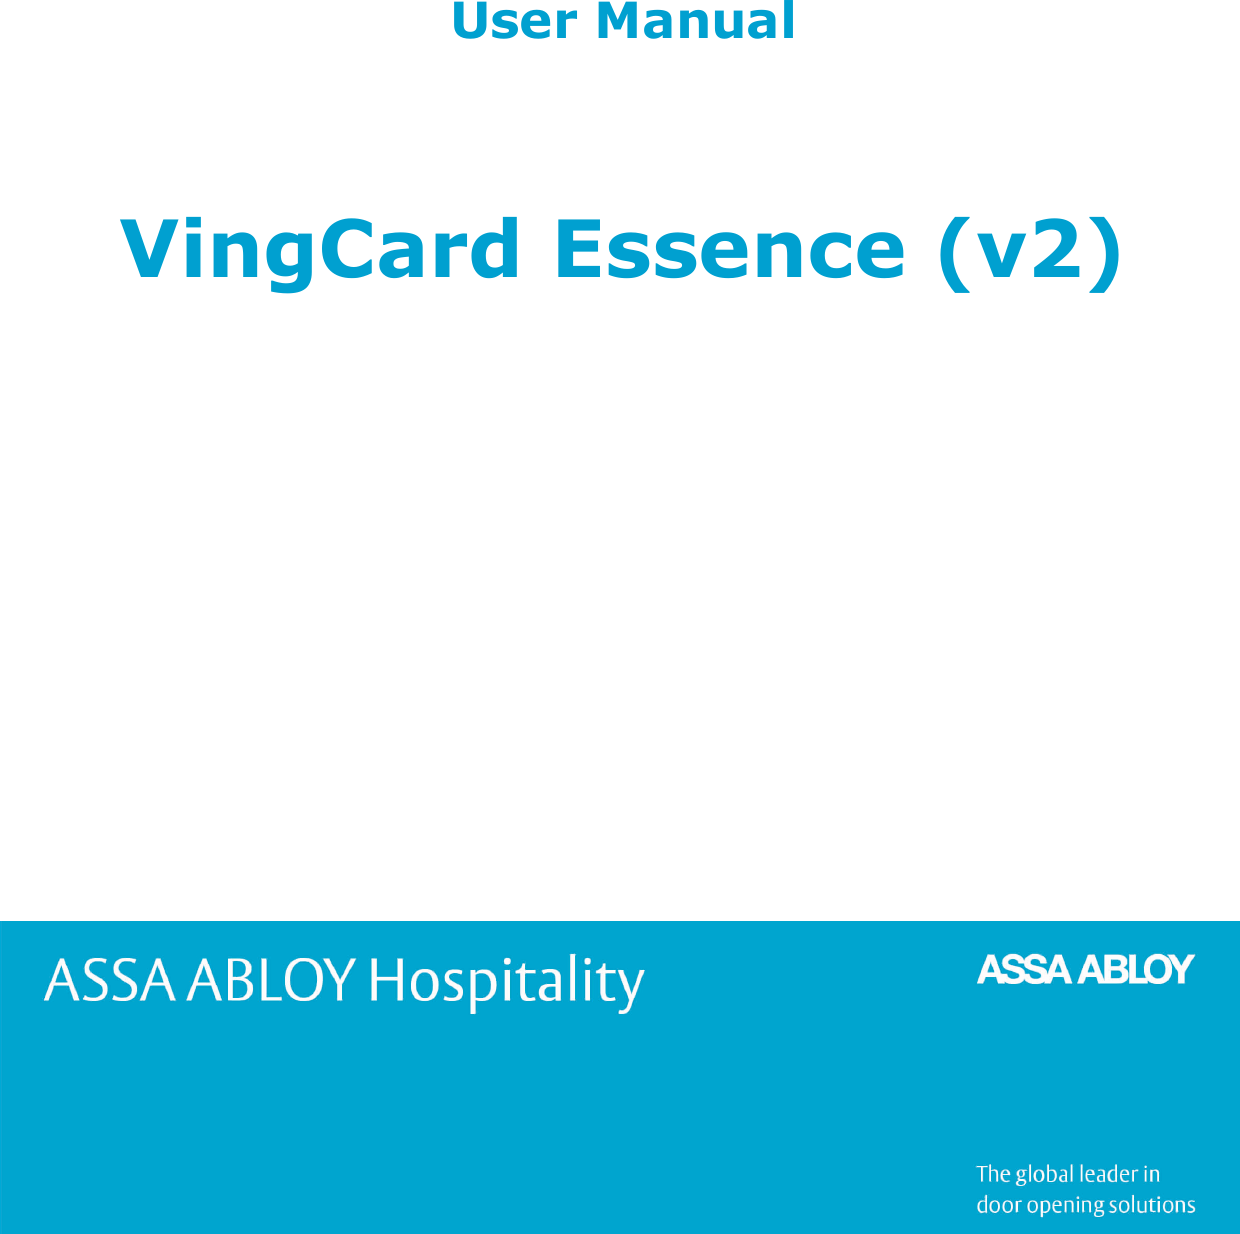 1ASSA ABLOY Hospitality 66 1000 023-2User ManualVingCard Essence (v2)